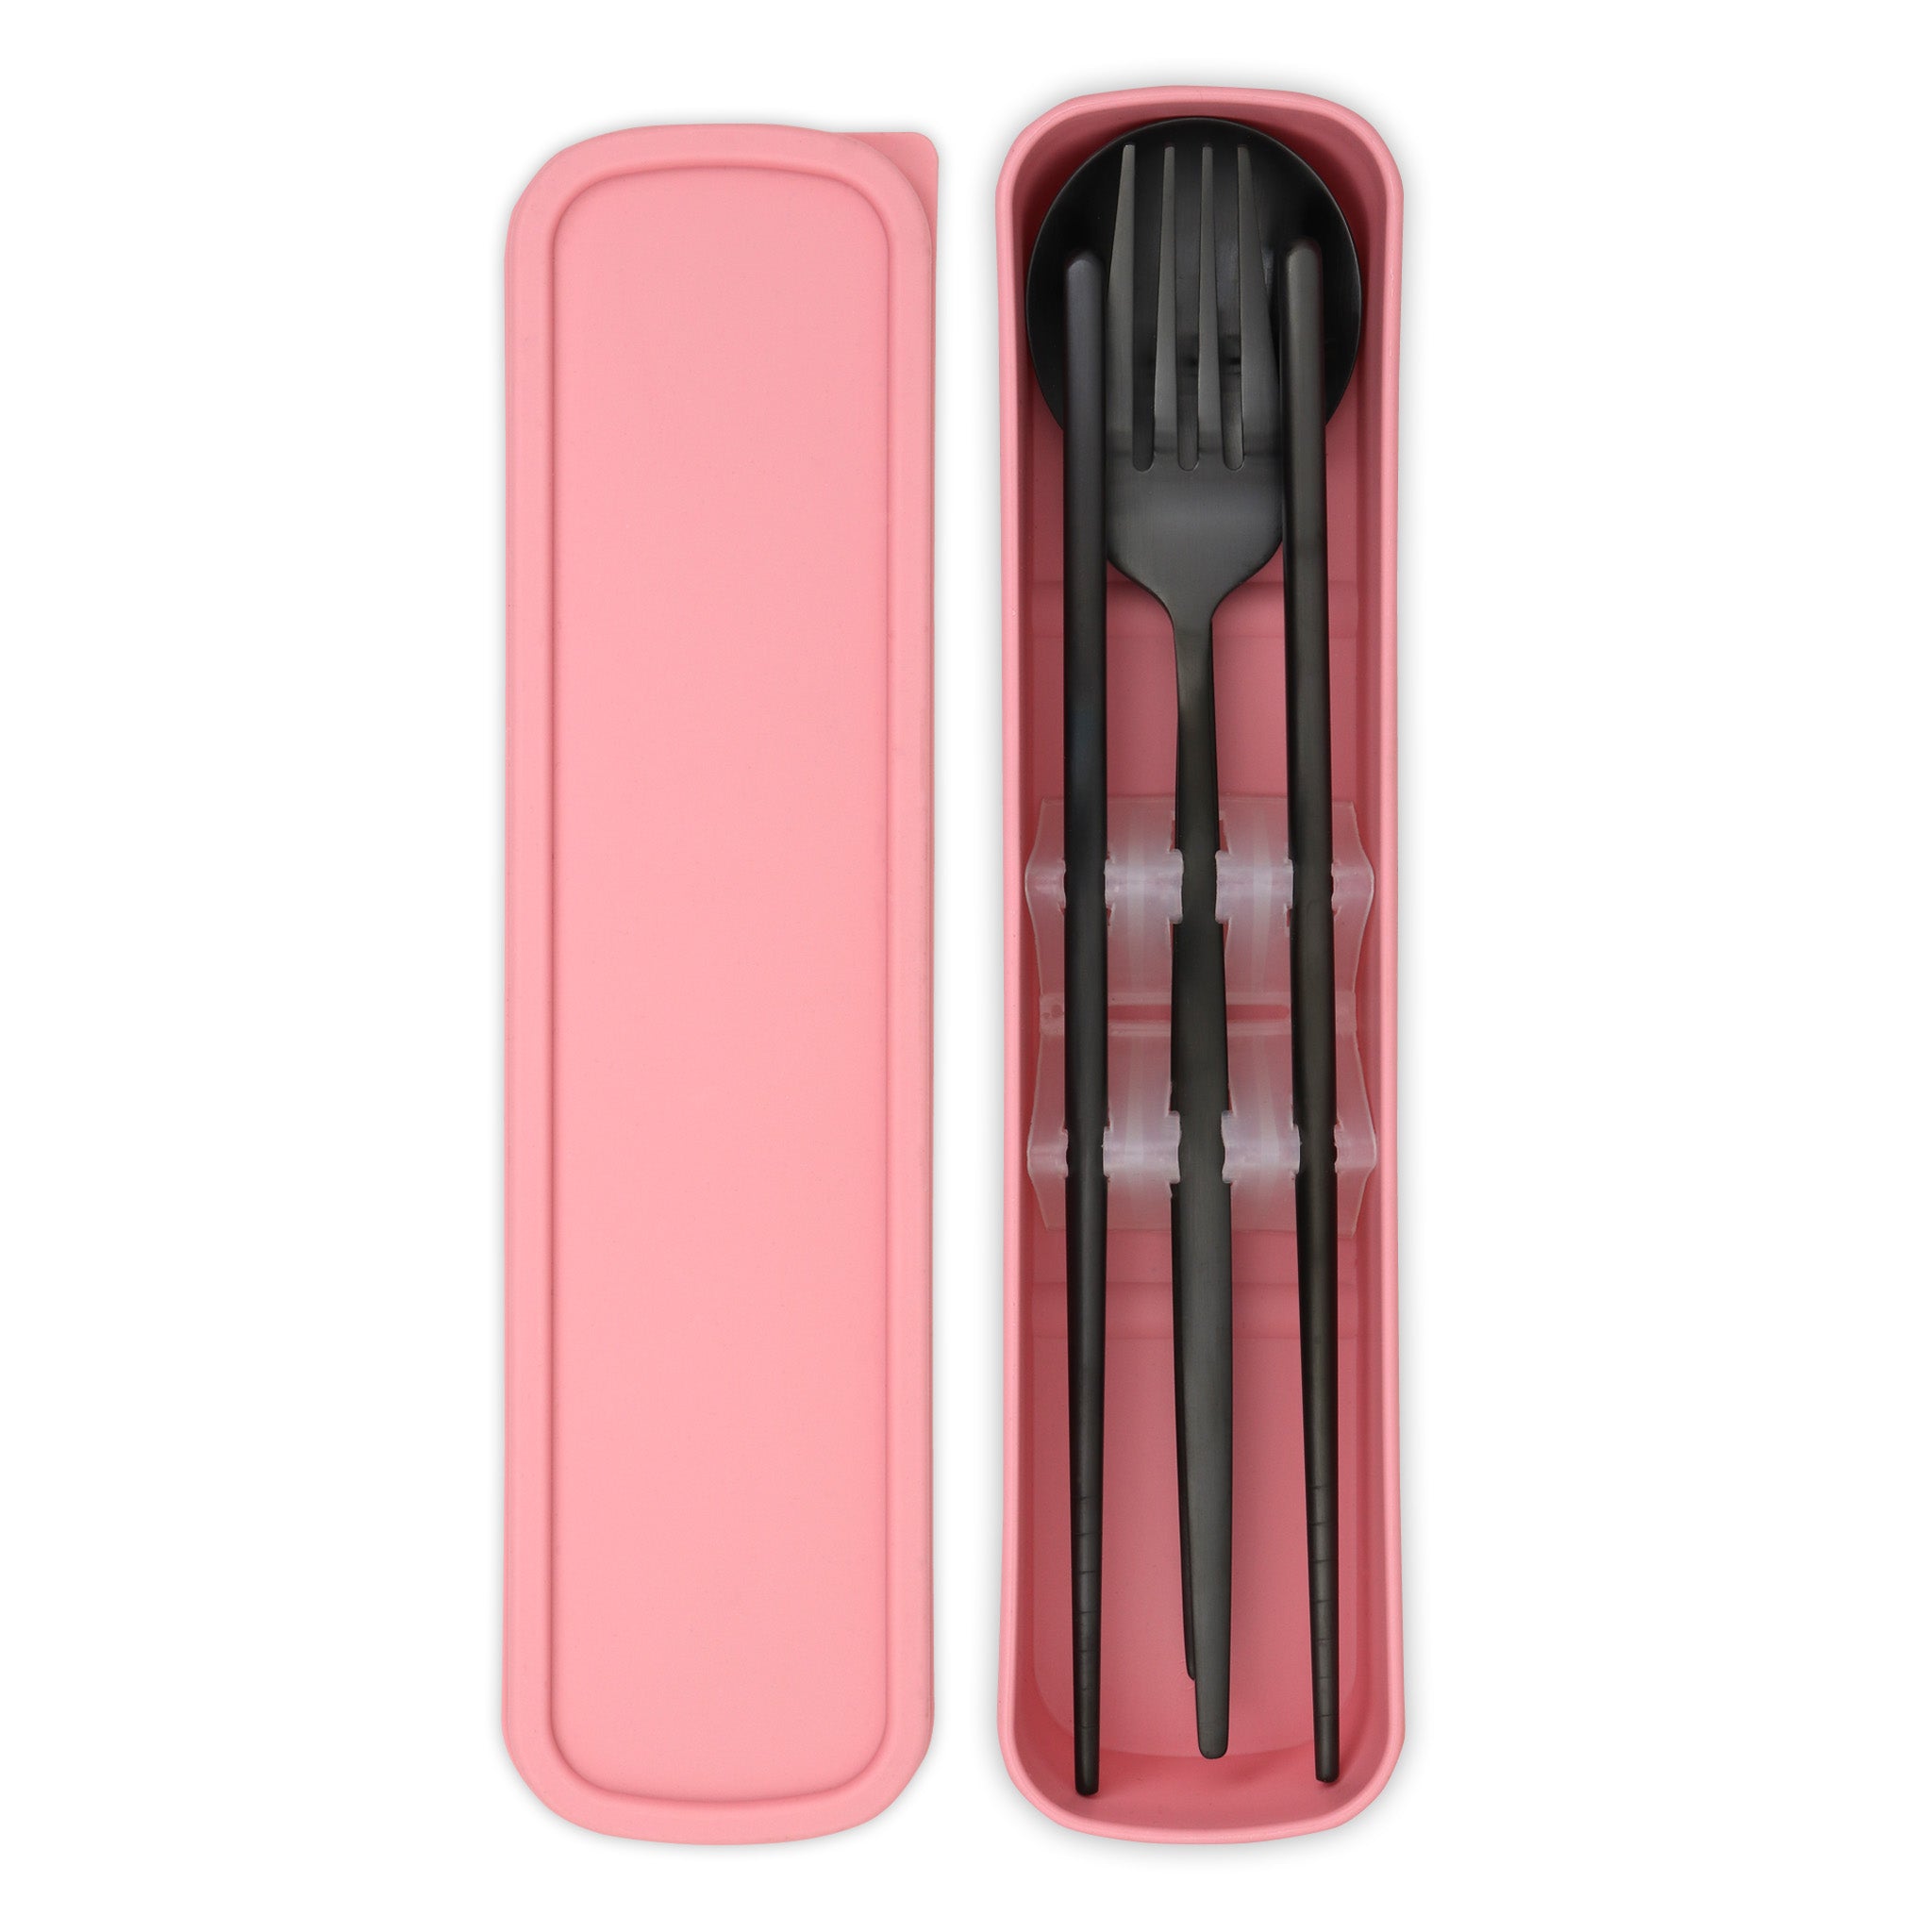 Travel Cutlery Box Set w/ Chopsticks (Satin Black)